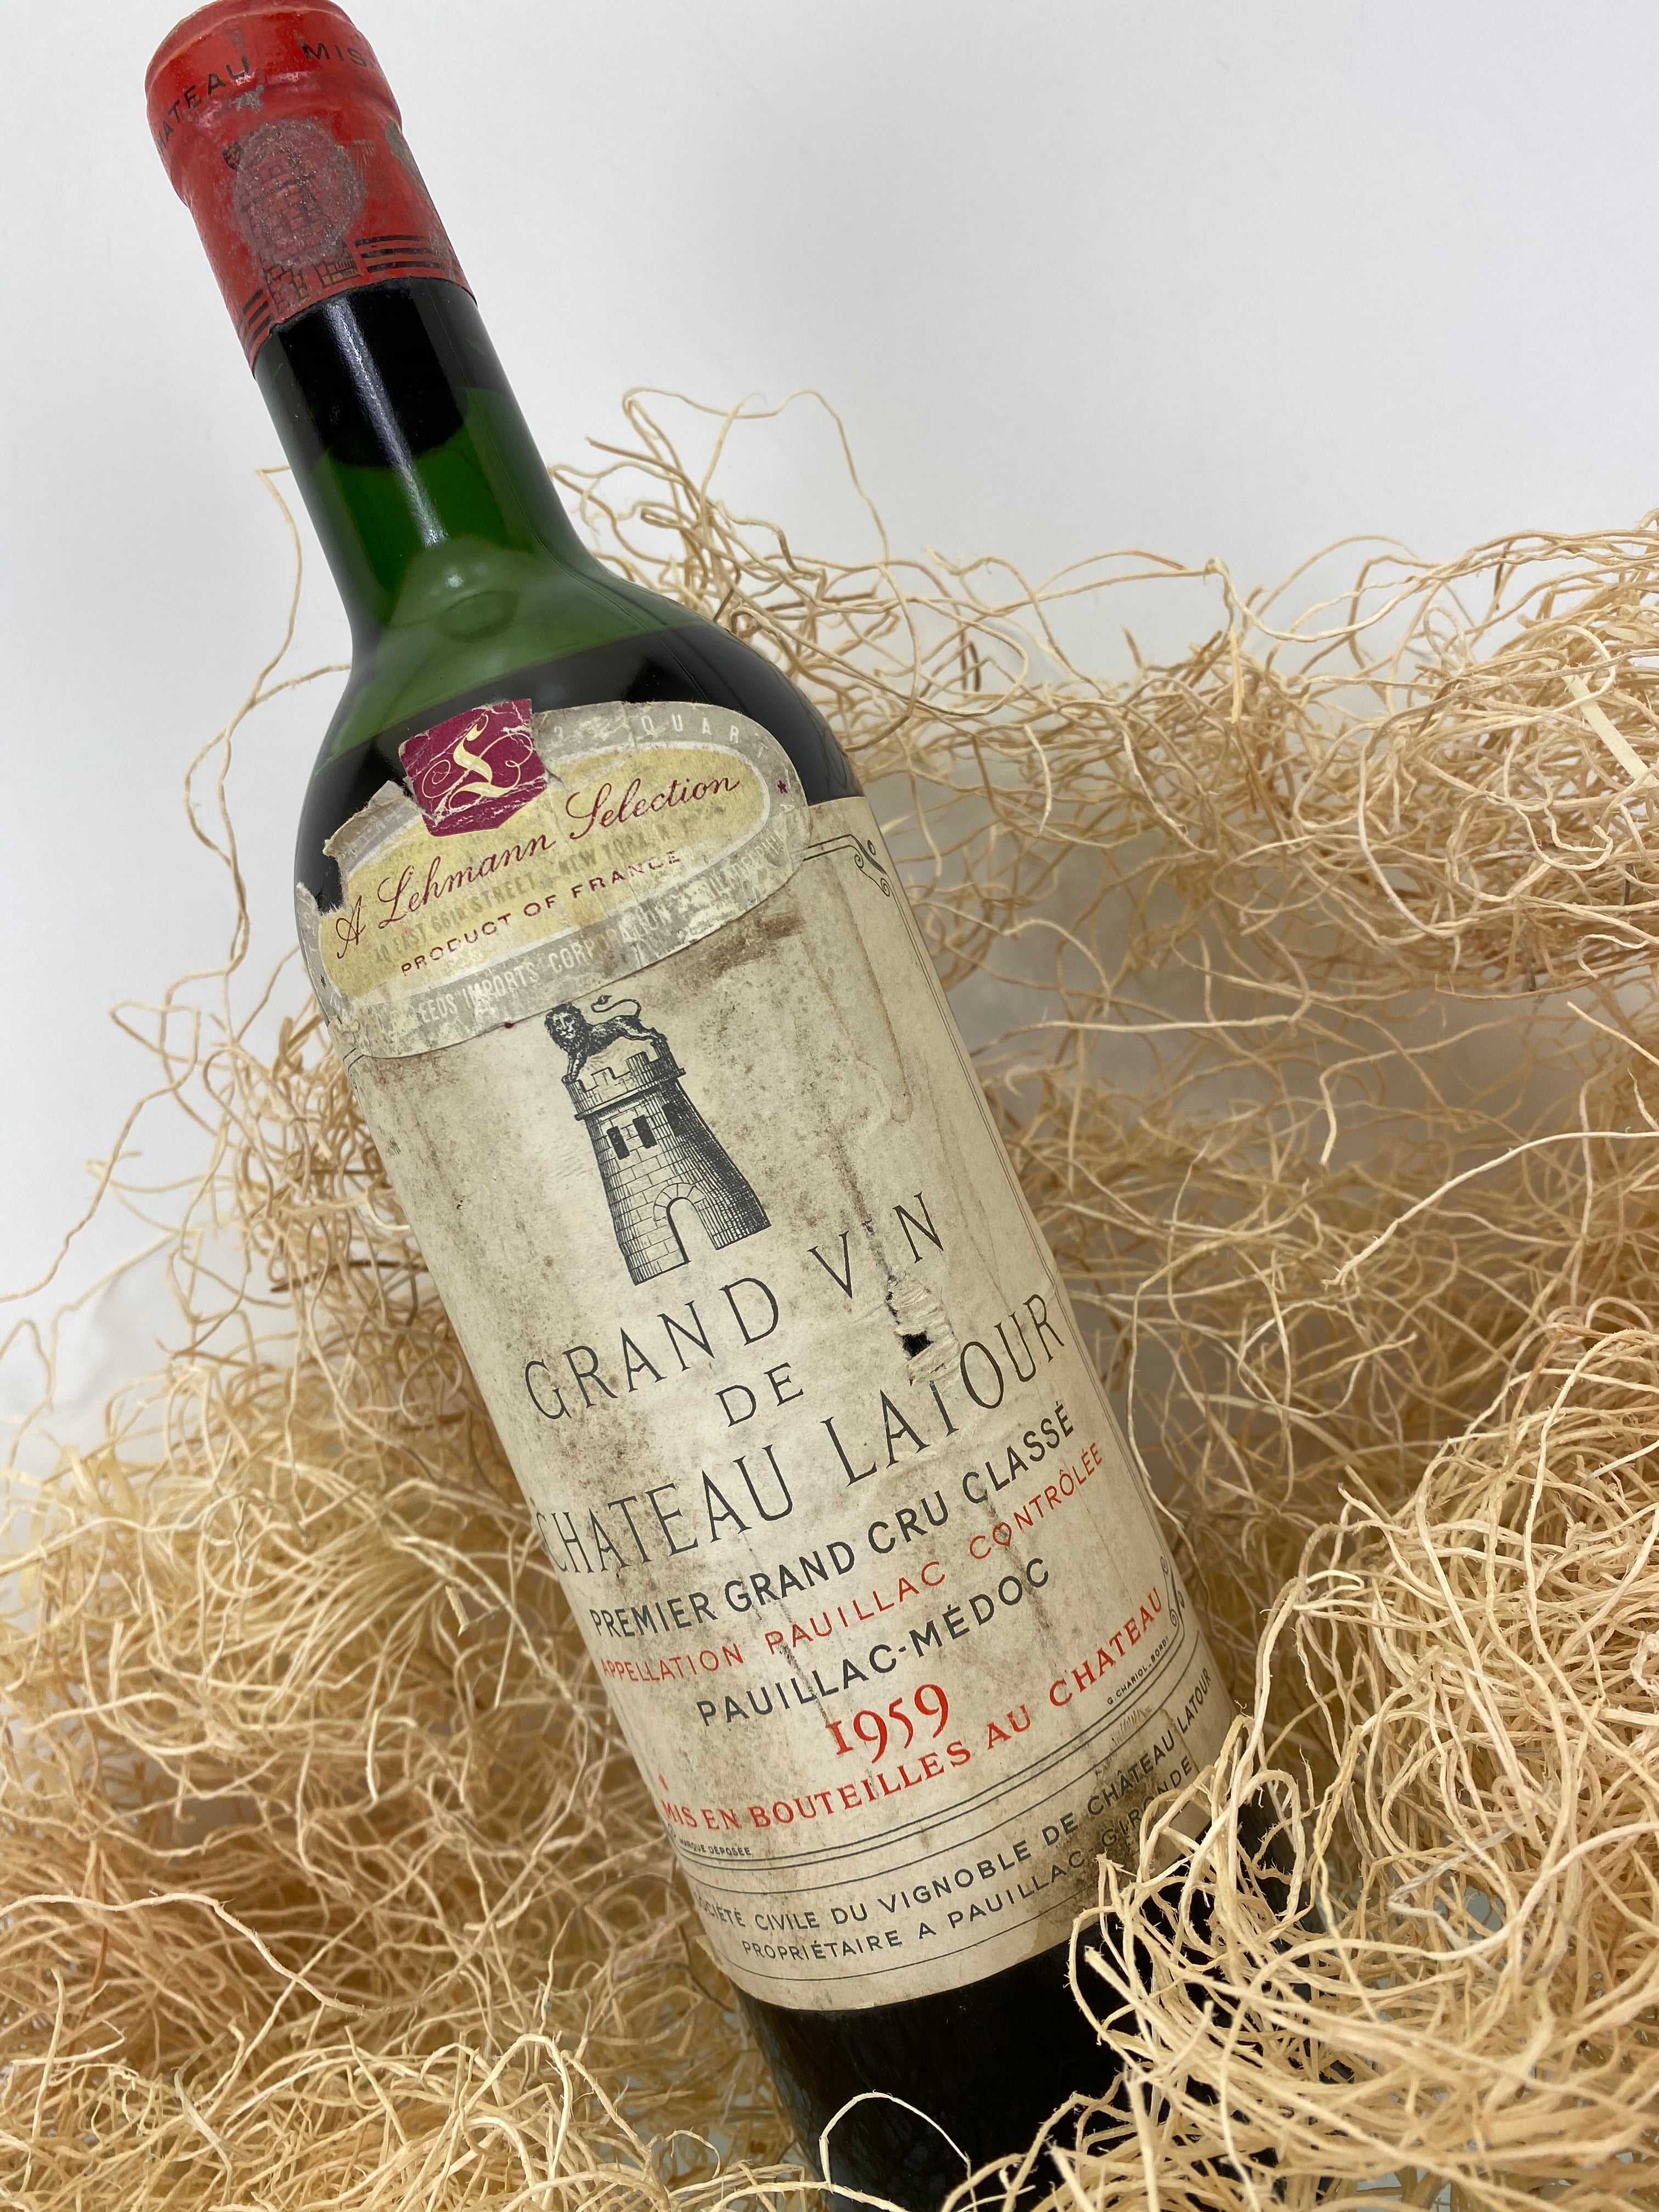 1959 BR ラトゥール BR Chateau Latou - 赤ワイン